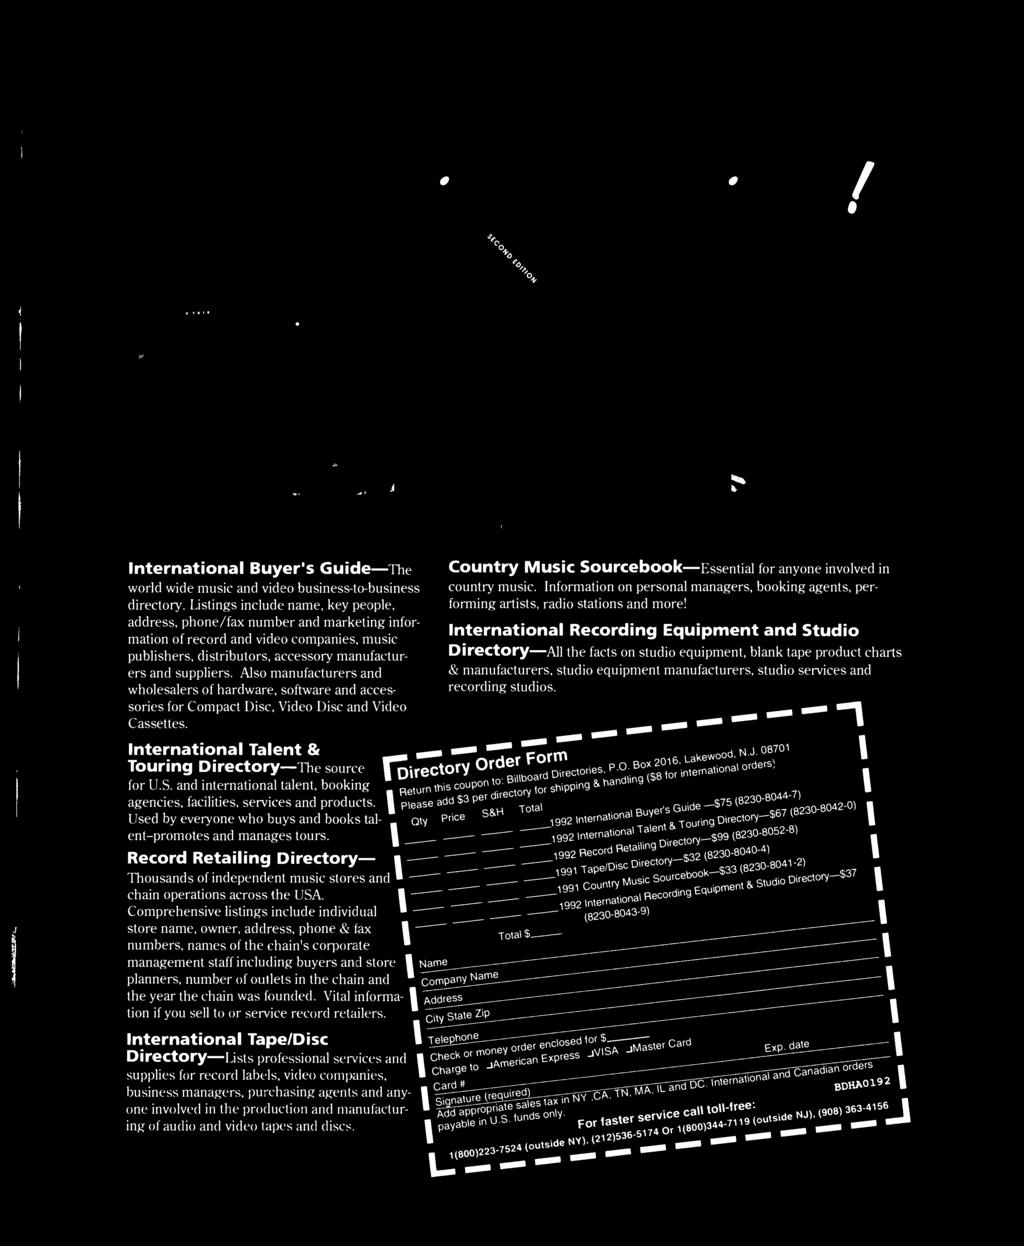 199 Biubarvl INTERNATIONAL RECORDING EQUIPMENT &STUDIO DIRECTORY RECOEDING ARTISTS MANAGERS AGENTS PROMOIEÇS VENUES CUSS HOTELS EQUIPMENT SERVICES FOR TOURING TALENT 1992 International Buyer's Guide